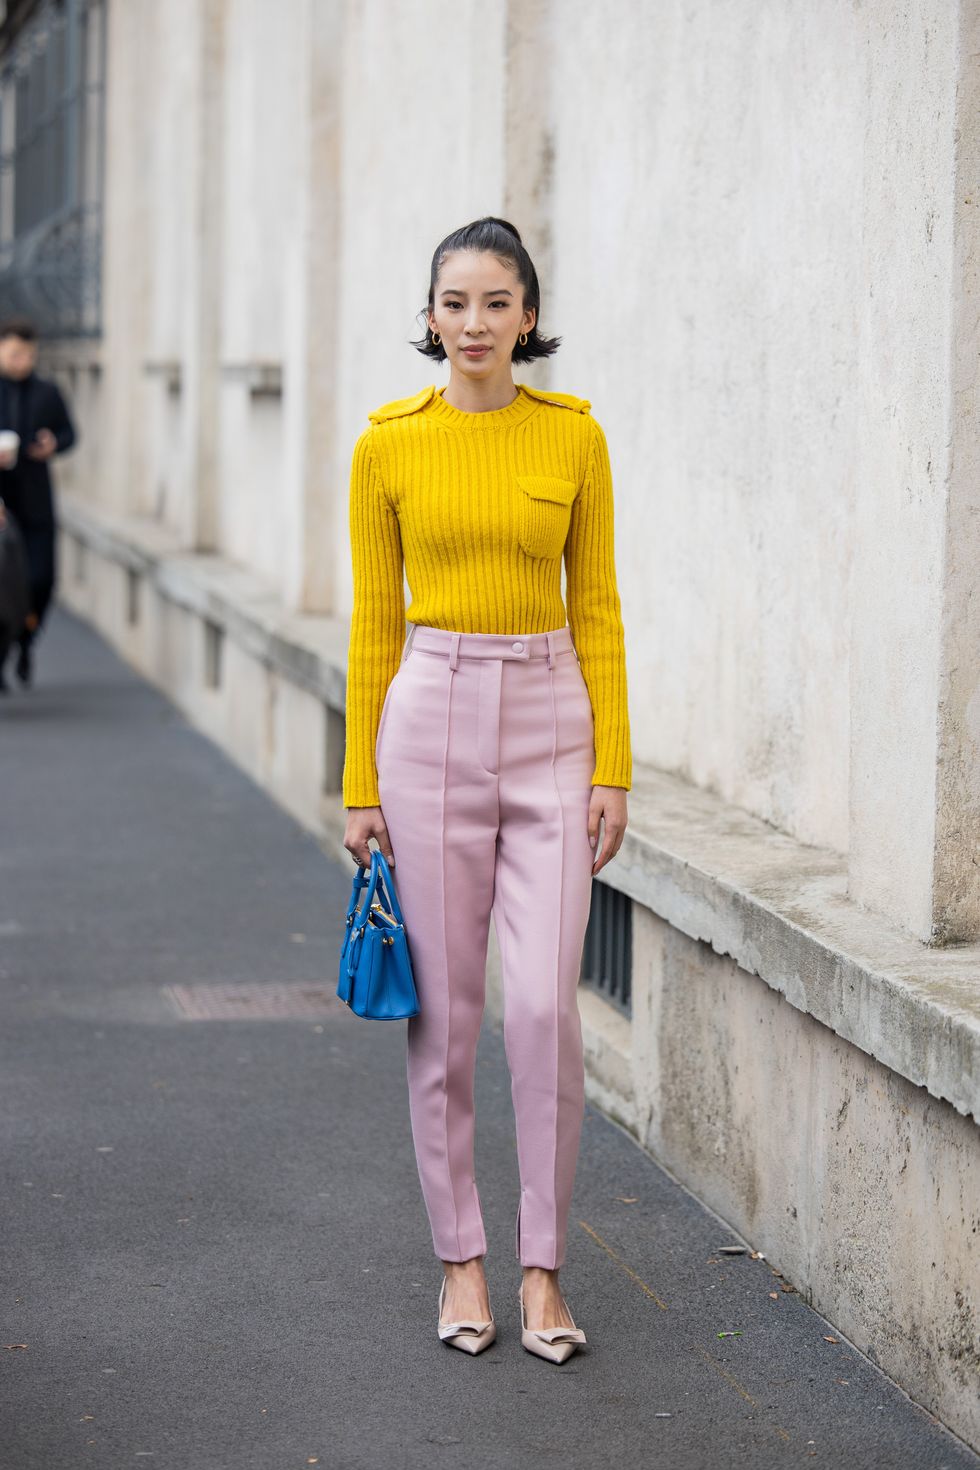 Irene Kim wears yellow knit with front pocket, pink pants, blue bag outside Prada during the Milan Fashion Week